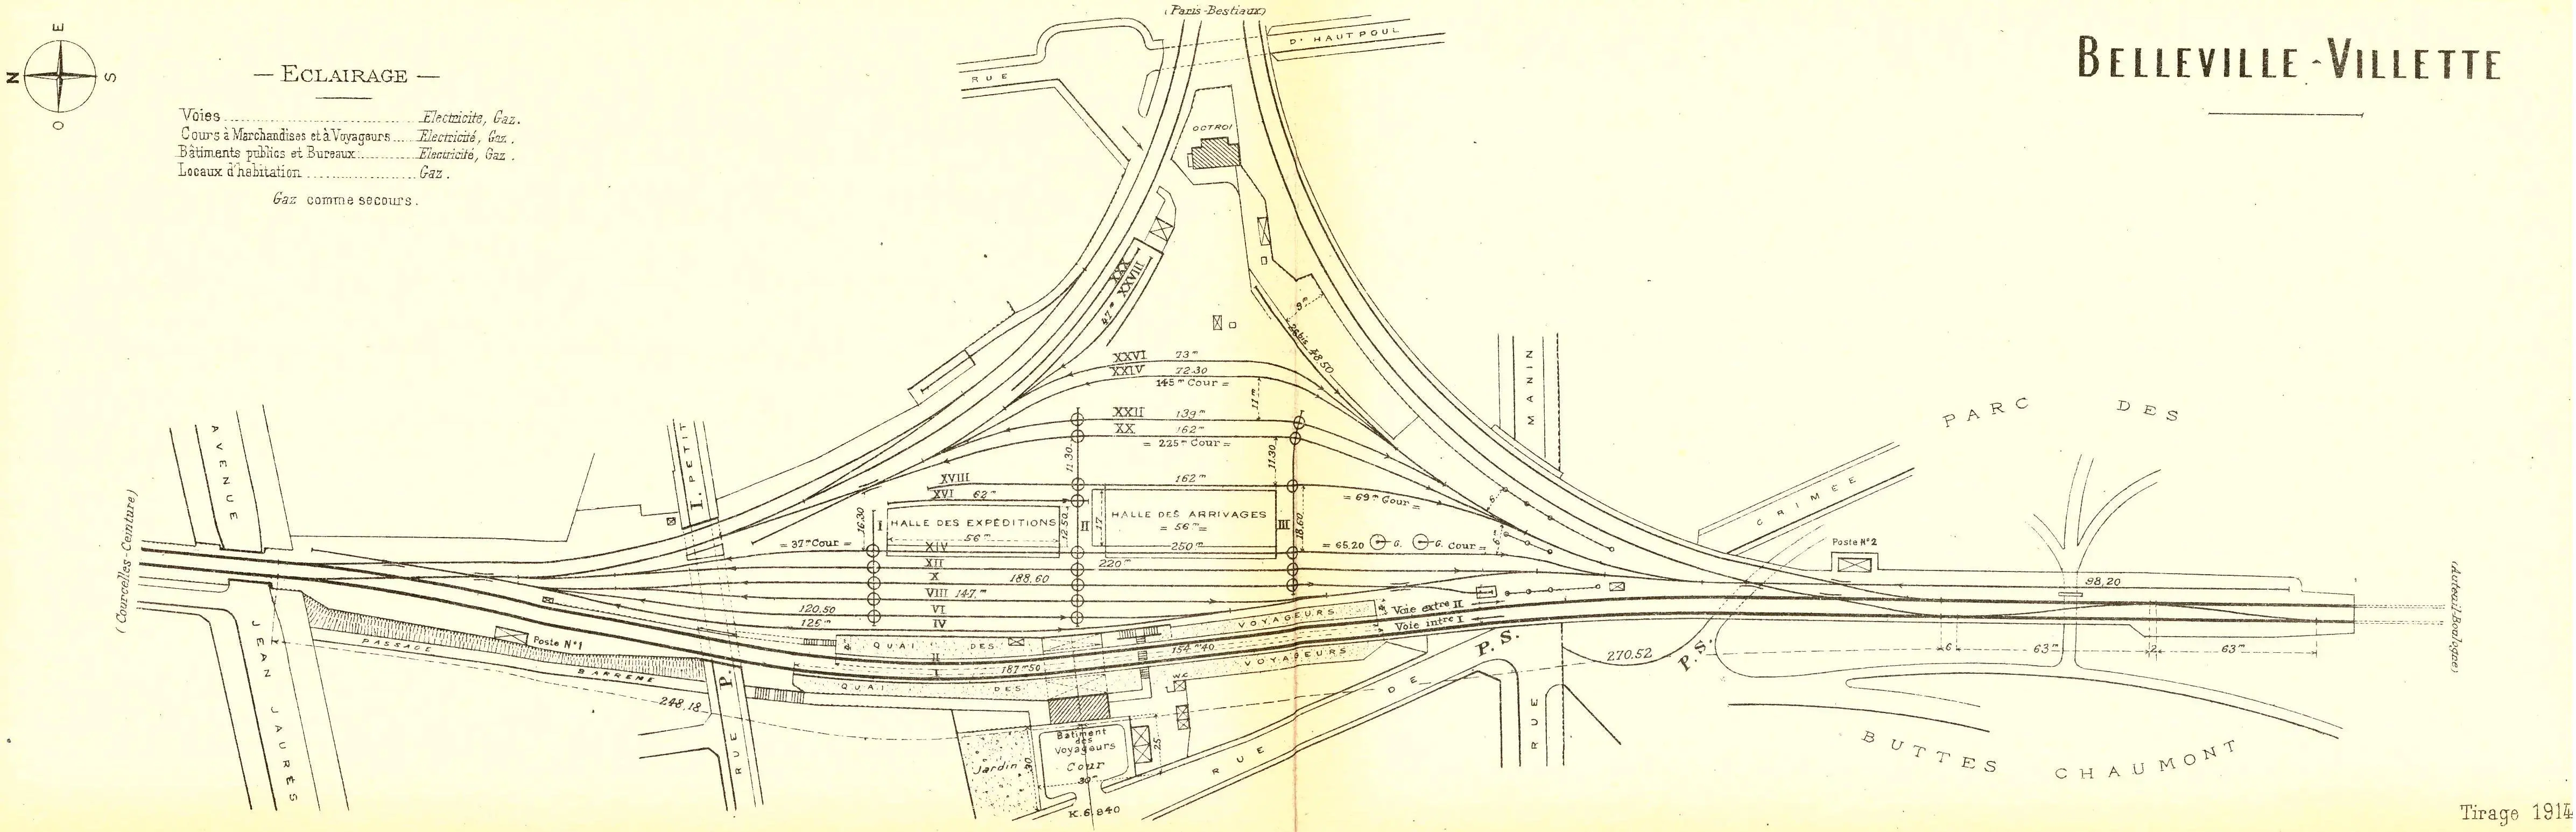 Plan des installations de la gare de Belleville-Villette en 1914 